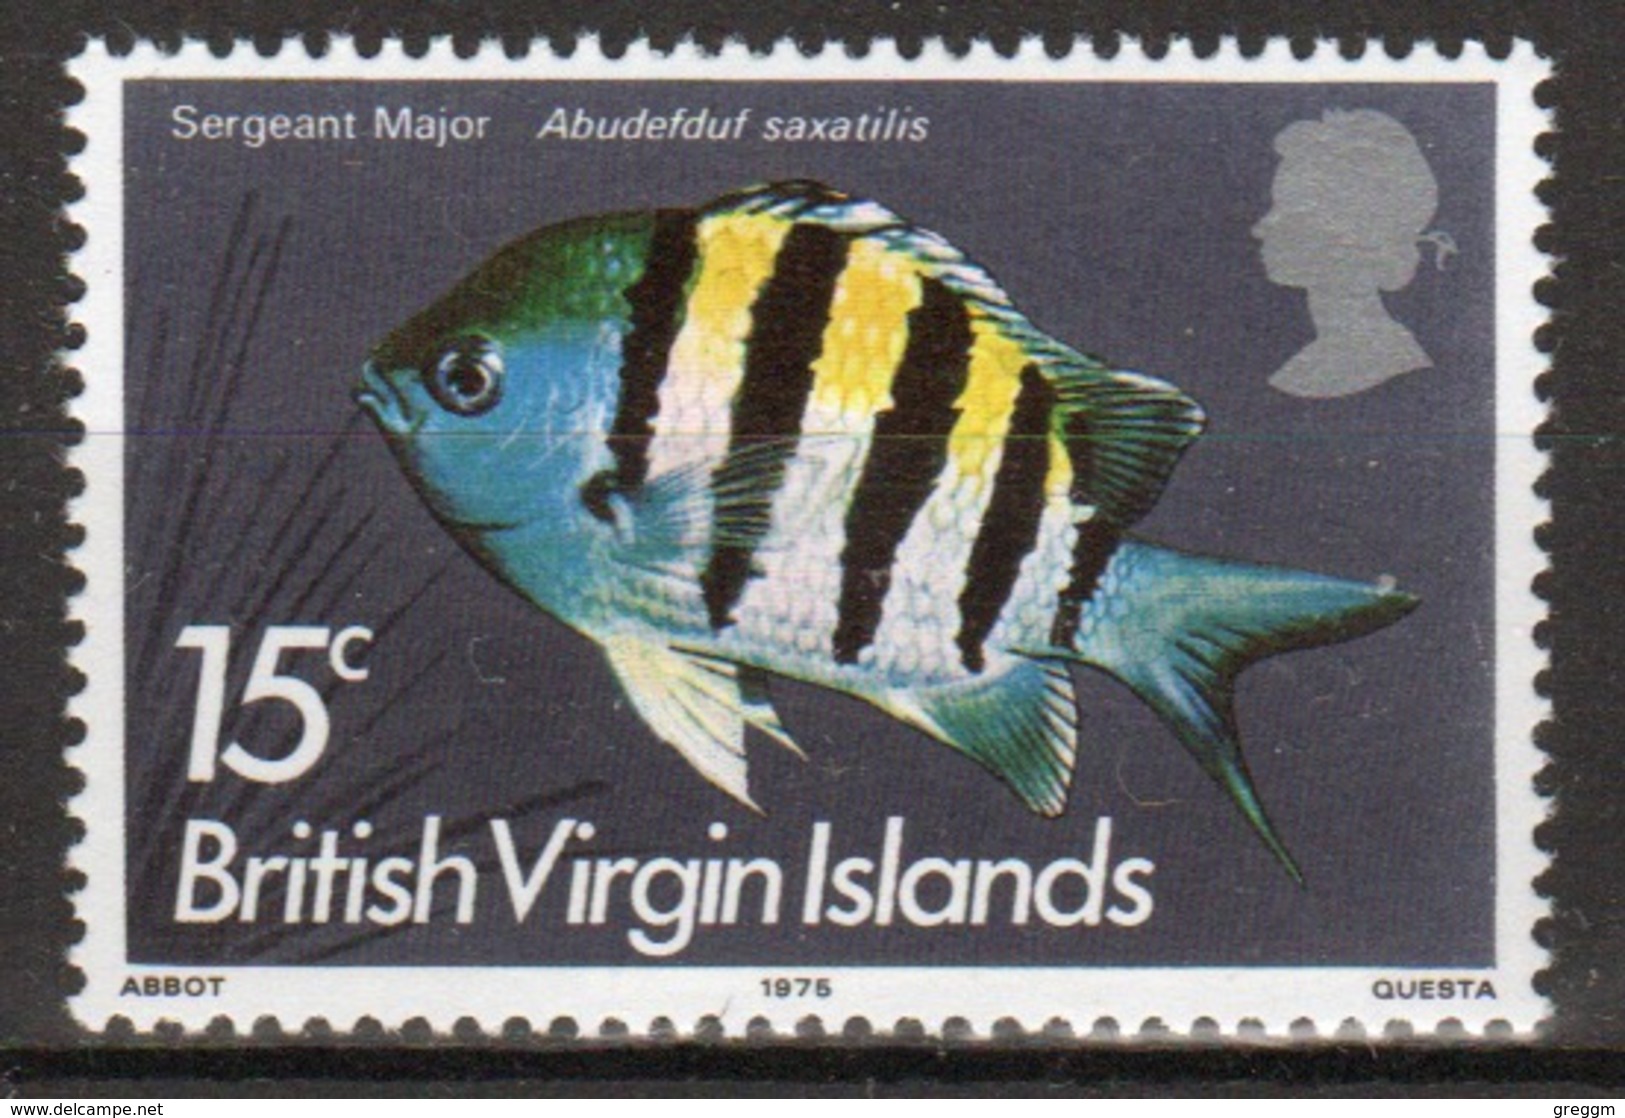 British Virgin Islands 1975 Queen Elizabeth Single 15c Stamp From The 1975 Definitive Fish Set. - British Virgin Islands